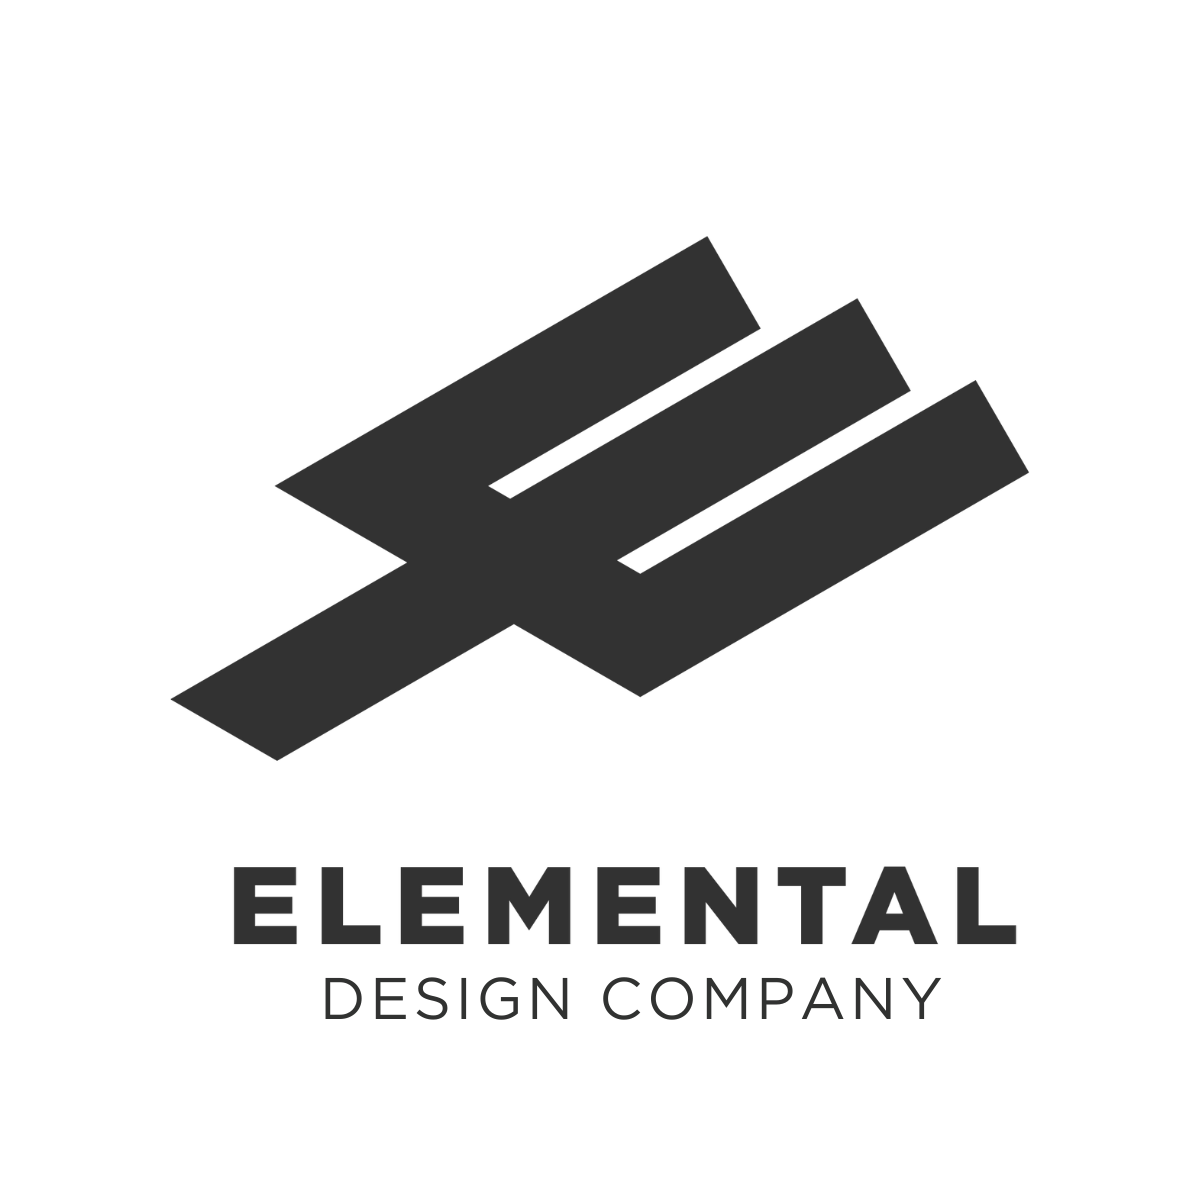 Elemental Design Company